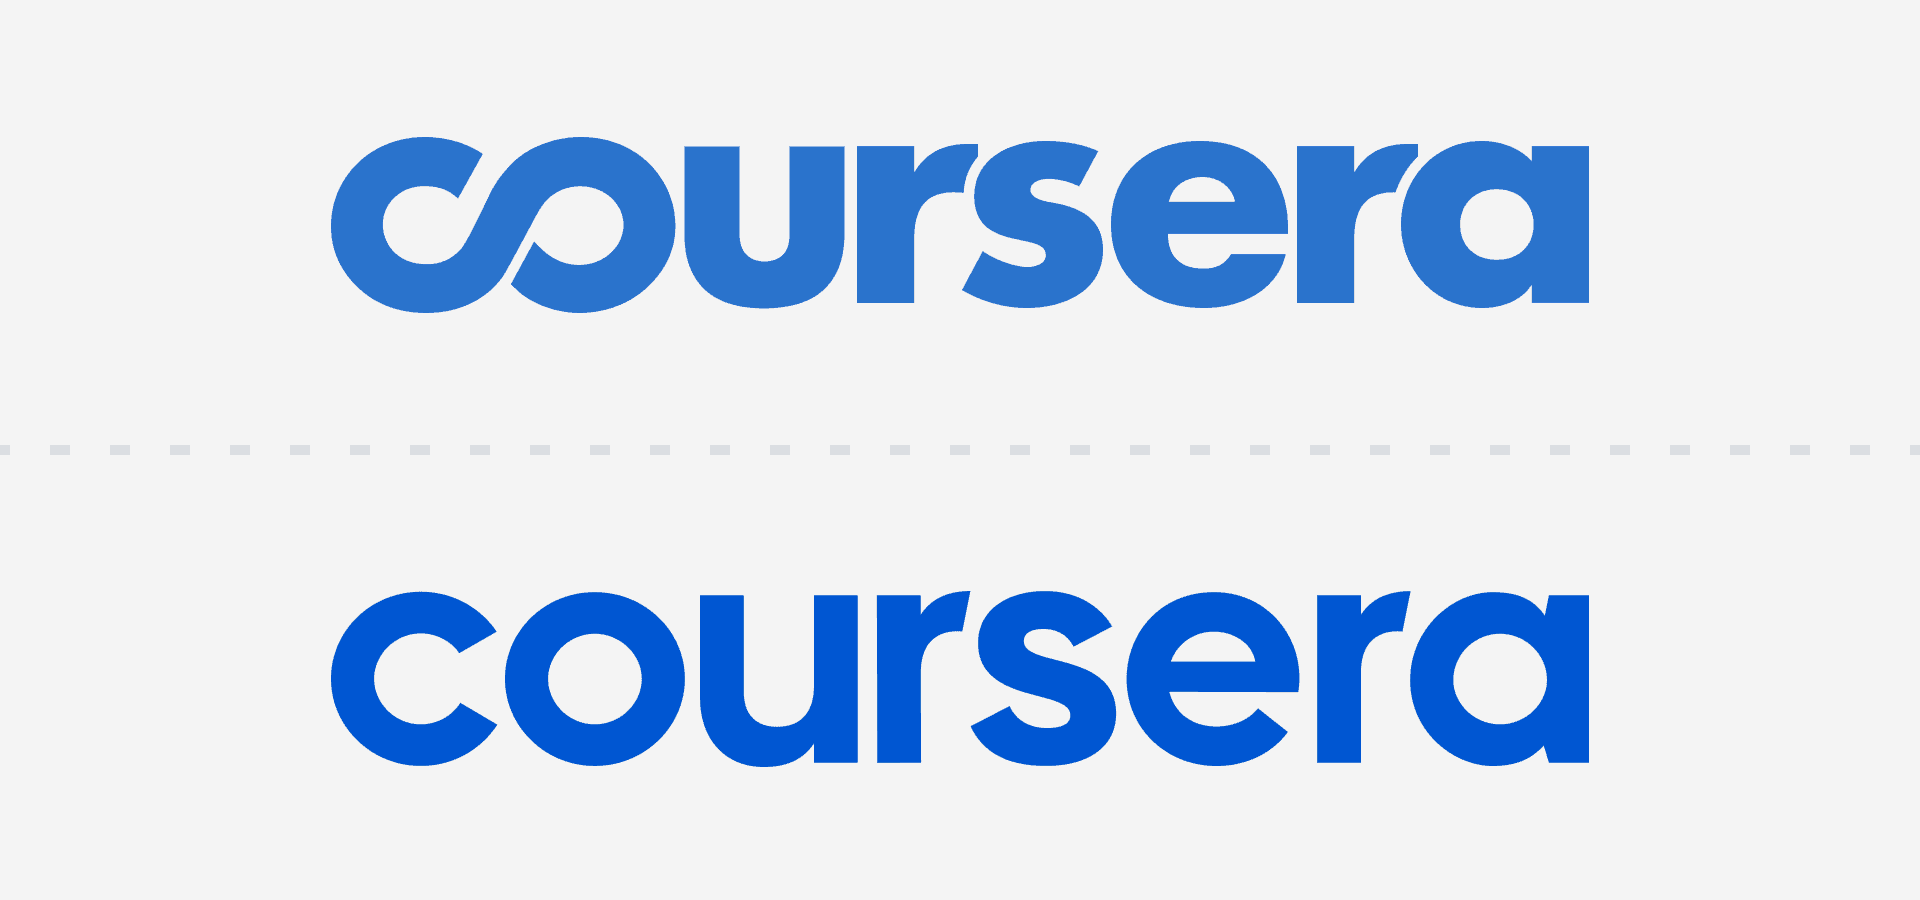 Https coursera org. Coursera. Курсера лого. Платформа Coursera. Coursera эмблема.